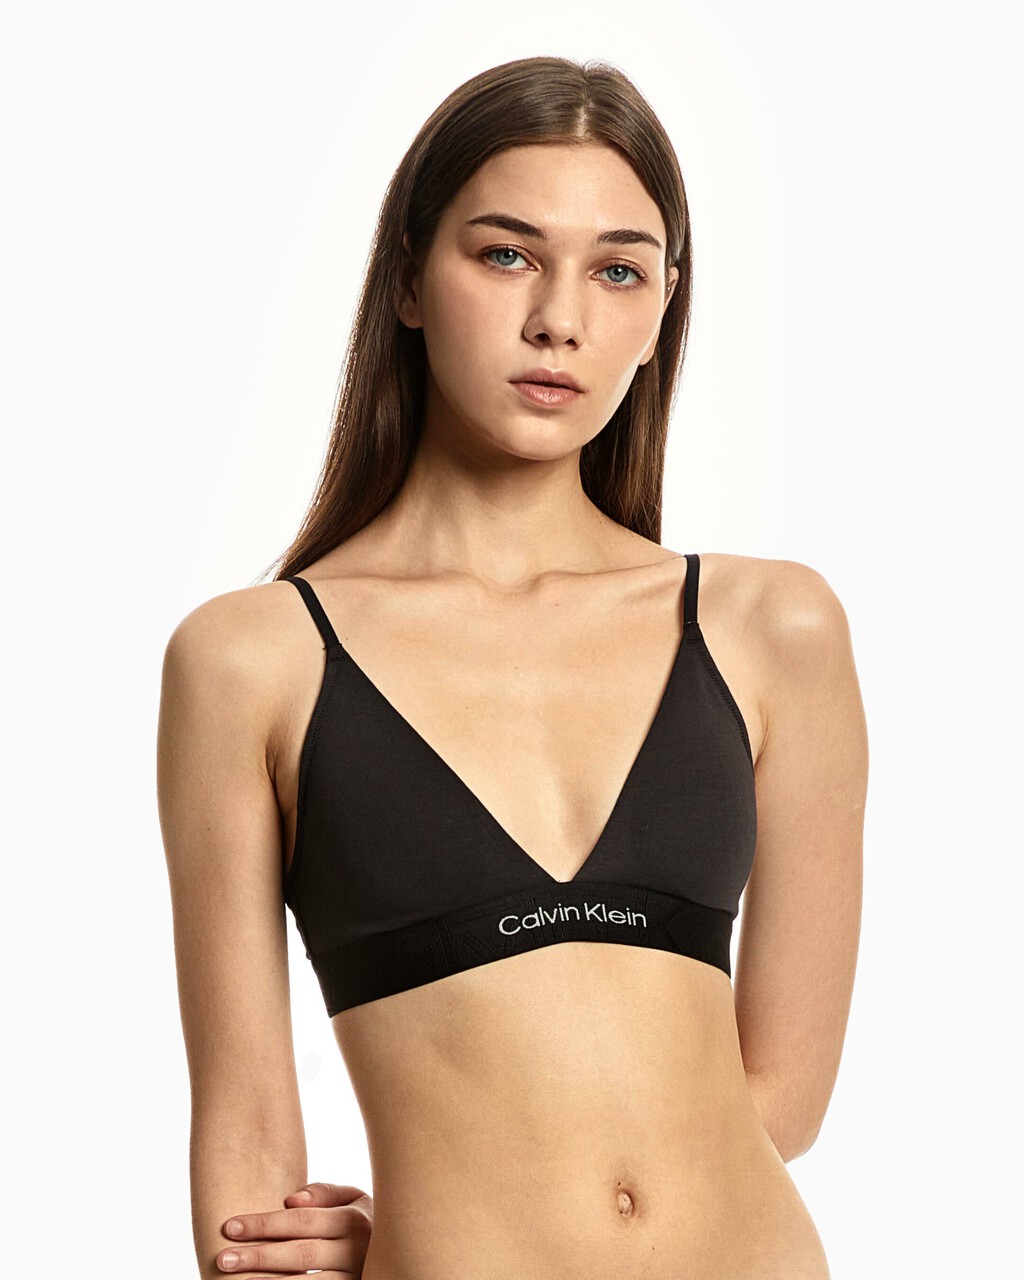 Calvin Klein Women's Standard Ombre Triangle Bra - QF1846 Retail $38.00